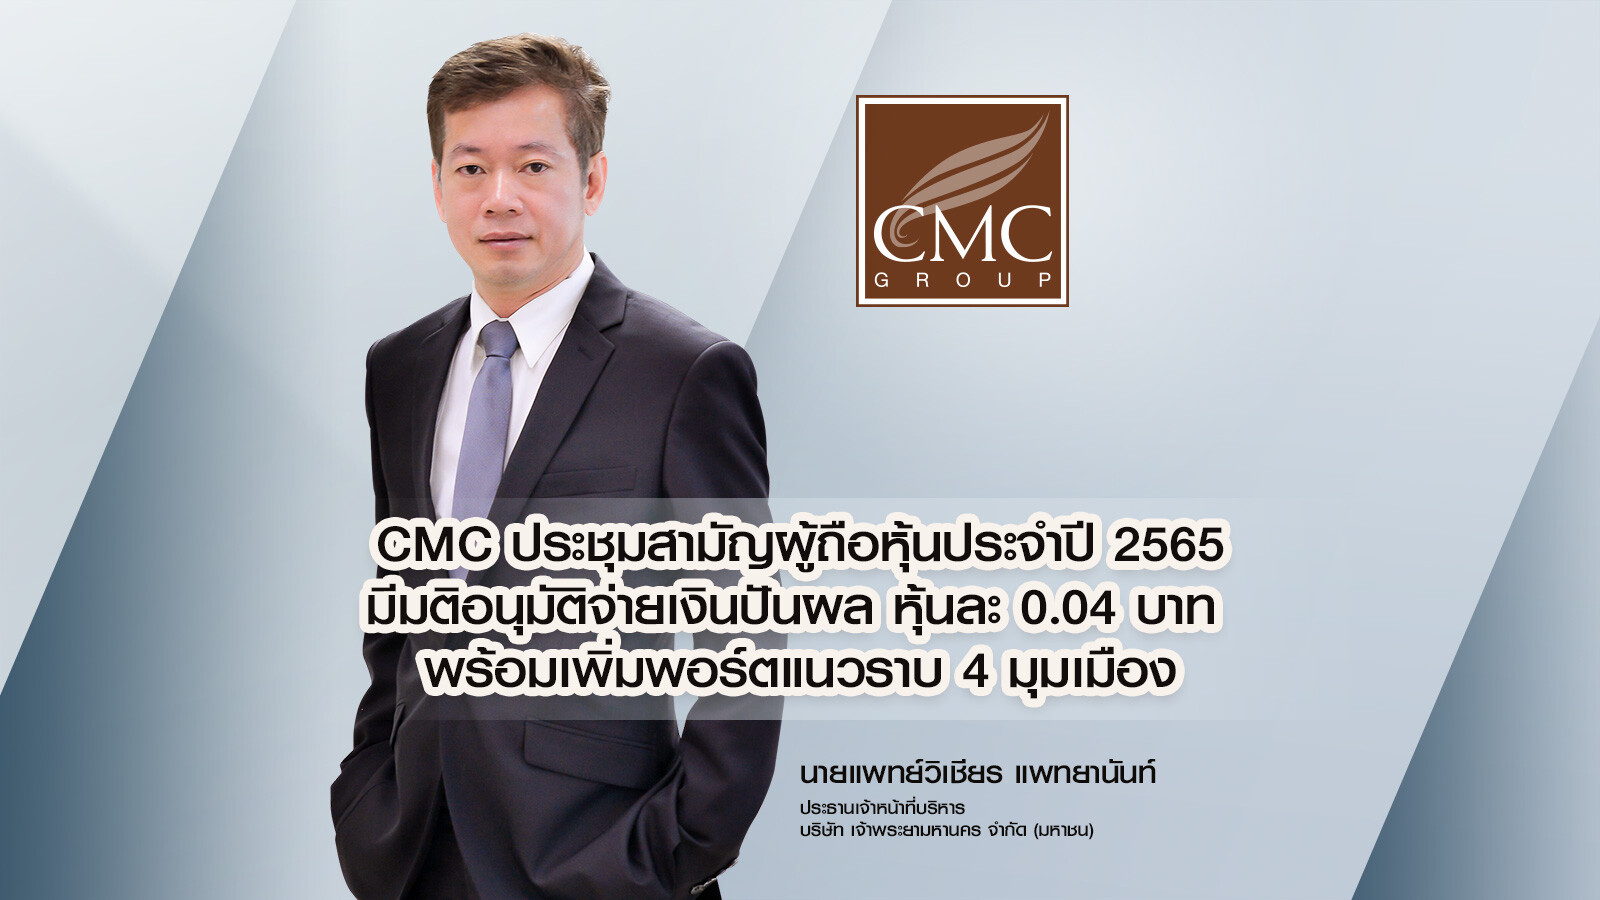 "CMC" มีมติอนุมัติจ่ายเงินปันผล หุ้นละ 0.04 บาท พร้อมเพิ่มพอร์ตแนวราบ 4 มุมเมือง ย้ำความเป็นผู้นำการพัฒนาอสังหาริมทรัพย์ไทย